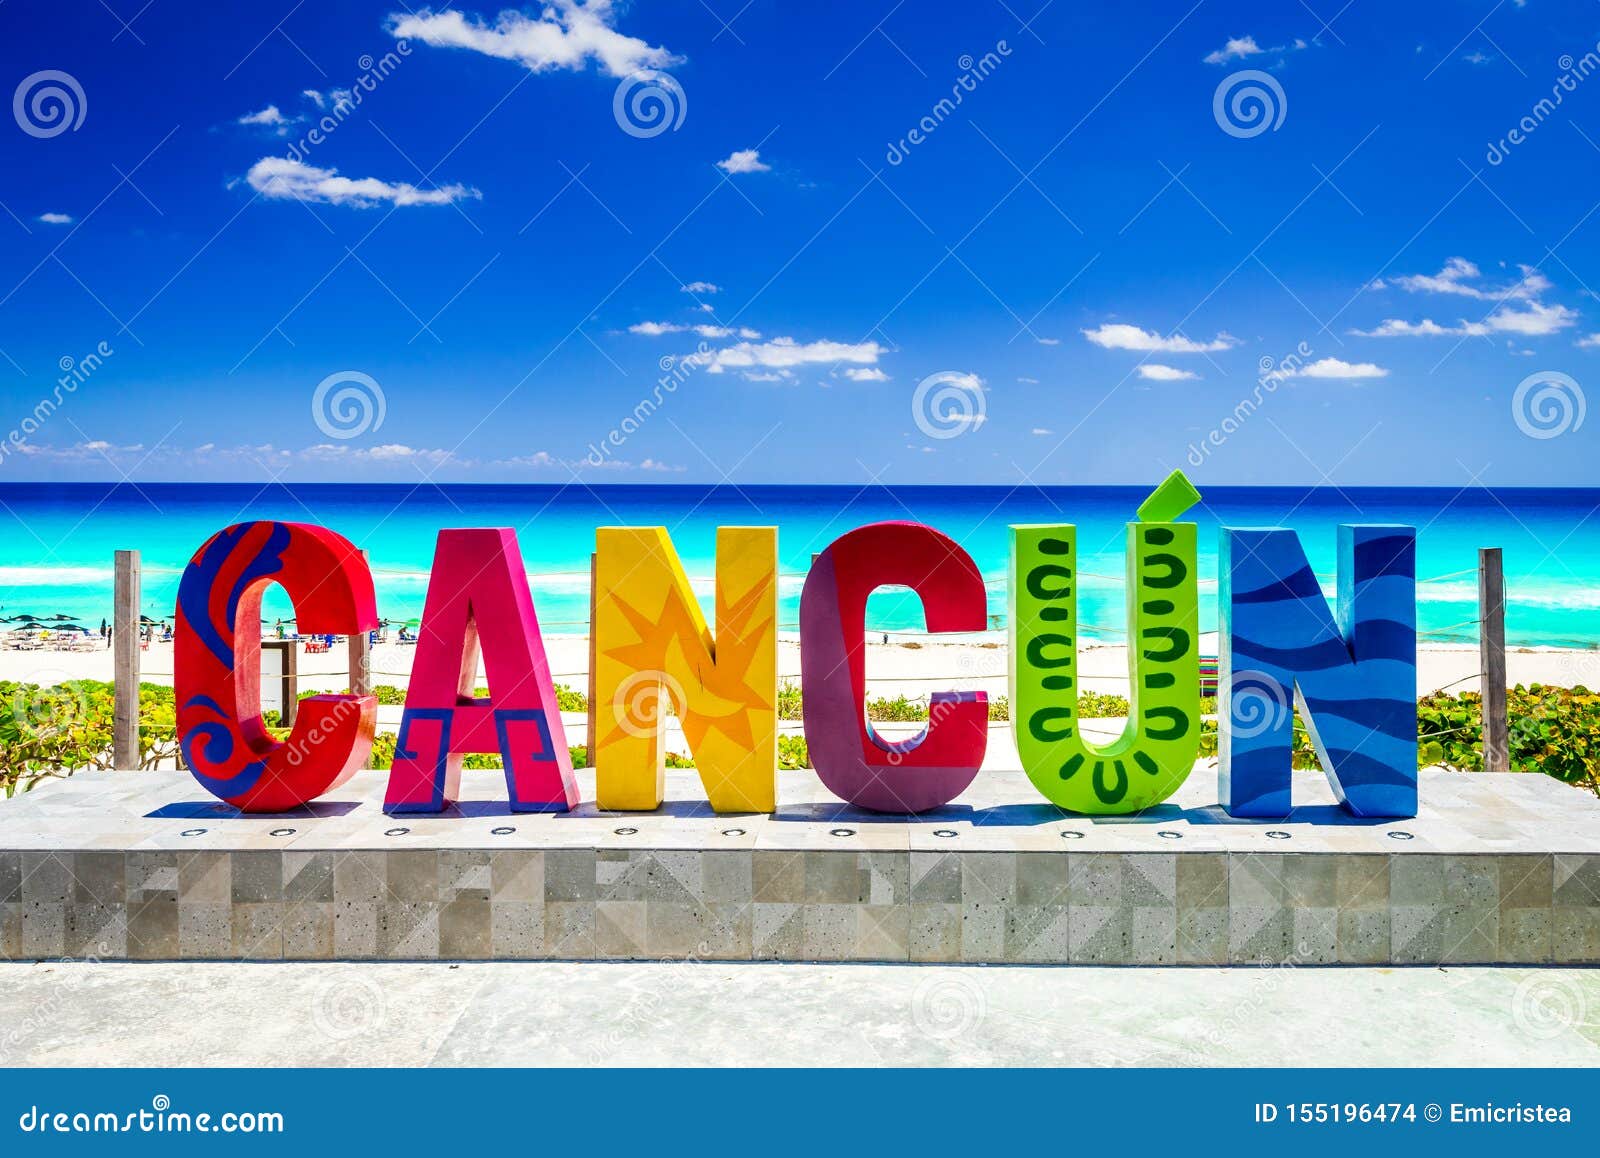 cancun, yucatan riviera maya, mexico